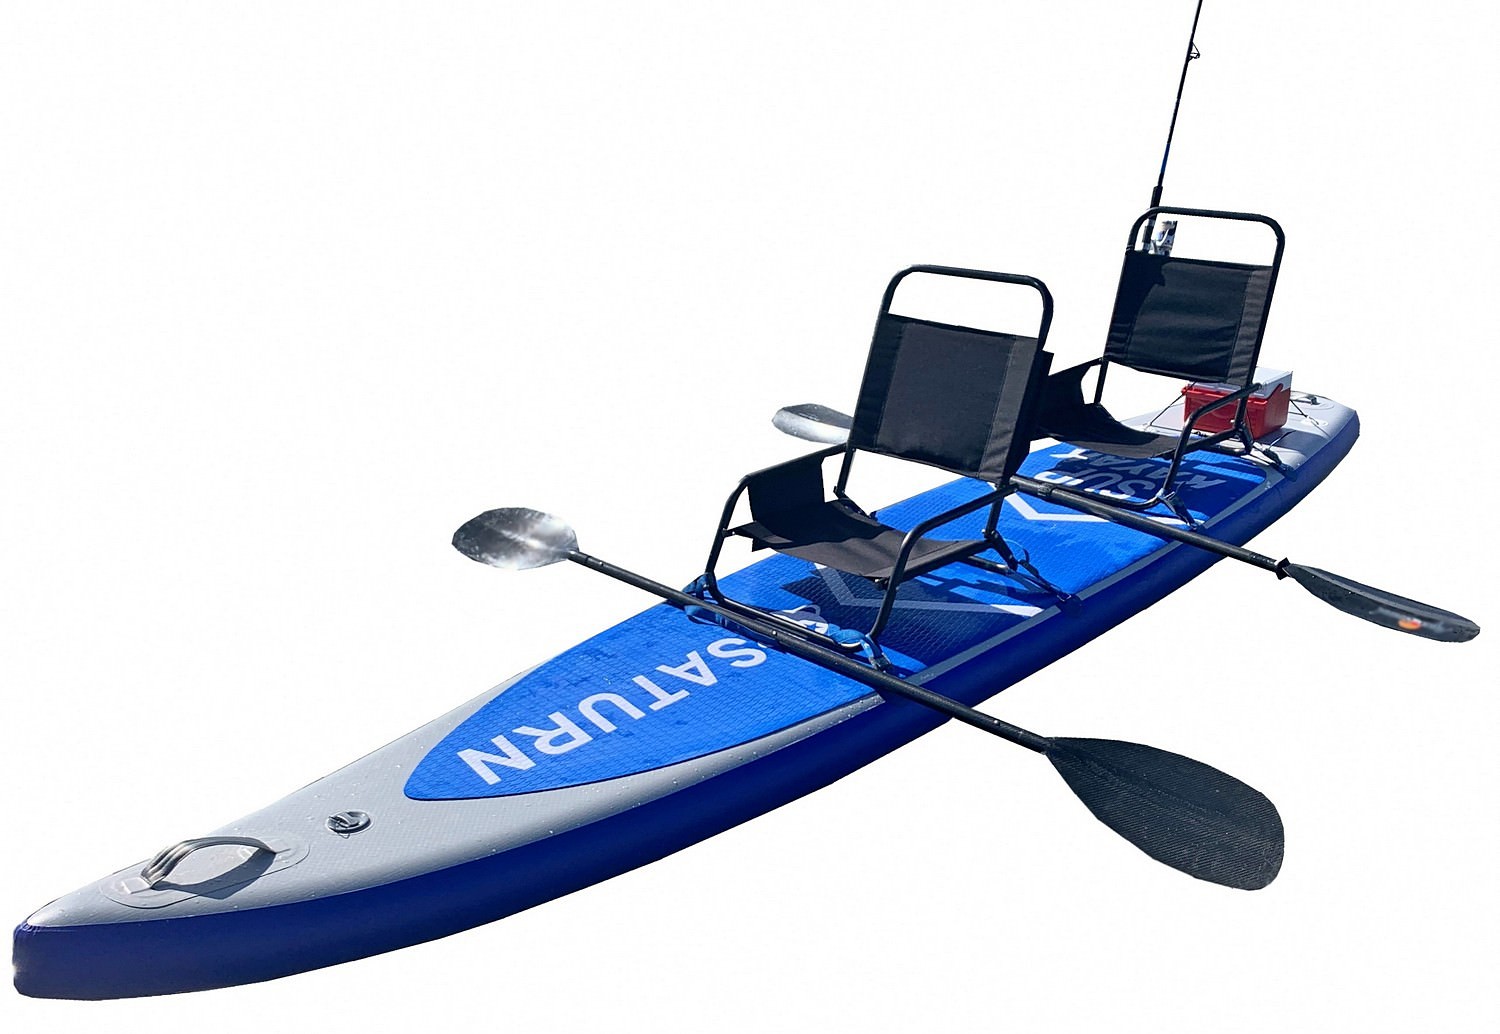 https://www.boatstogo.com/images/detailed/9/Inflatable-SUP-Kayak-414-03_8mjh-01.jpg